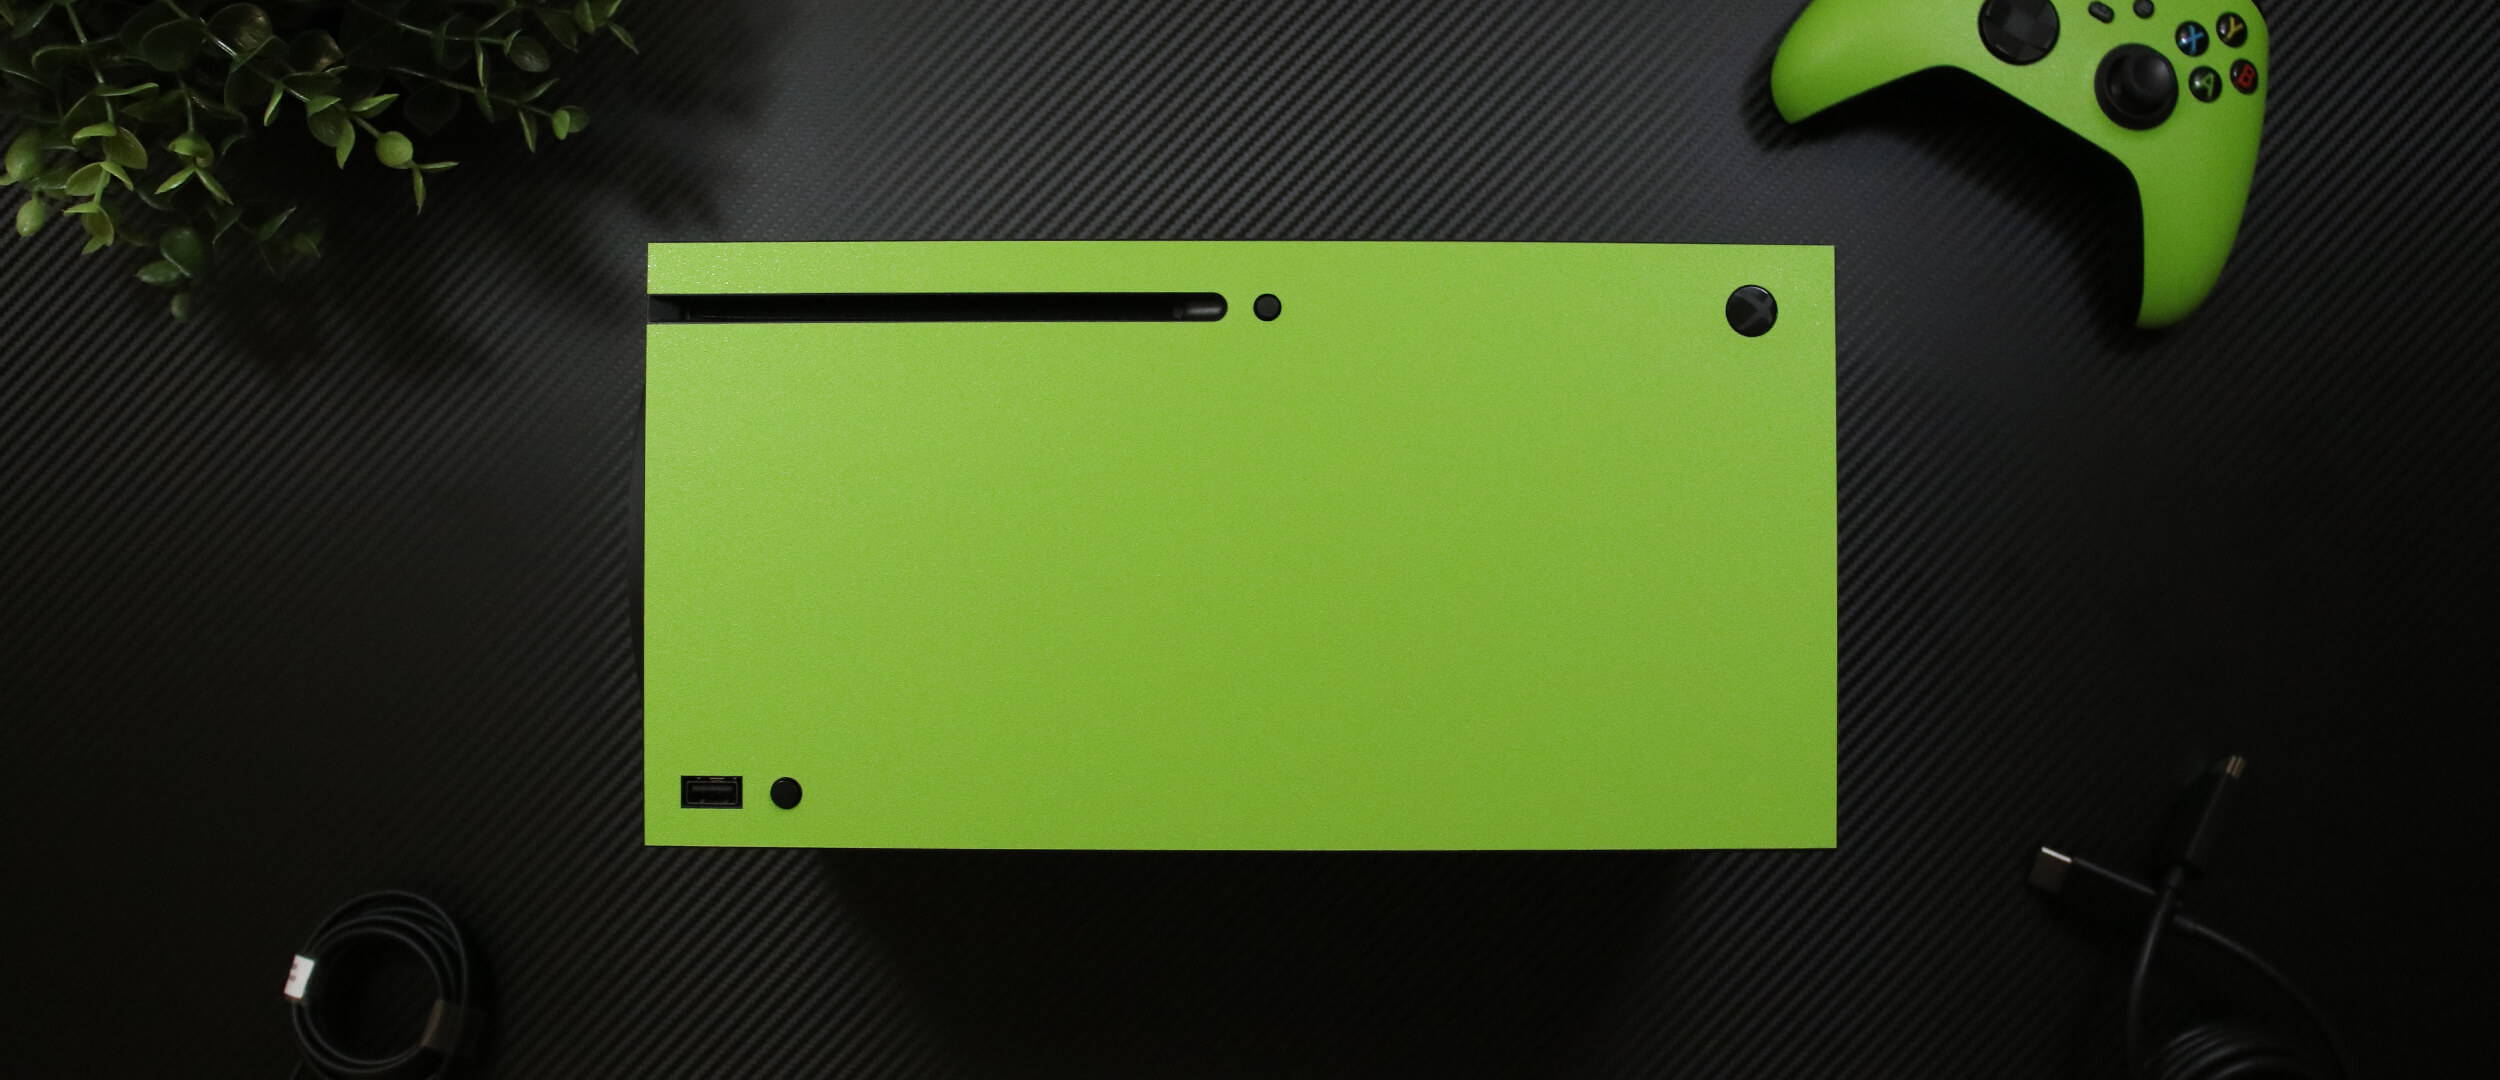 Xbox Series X Textured matt green skins